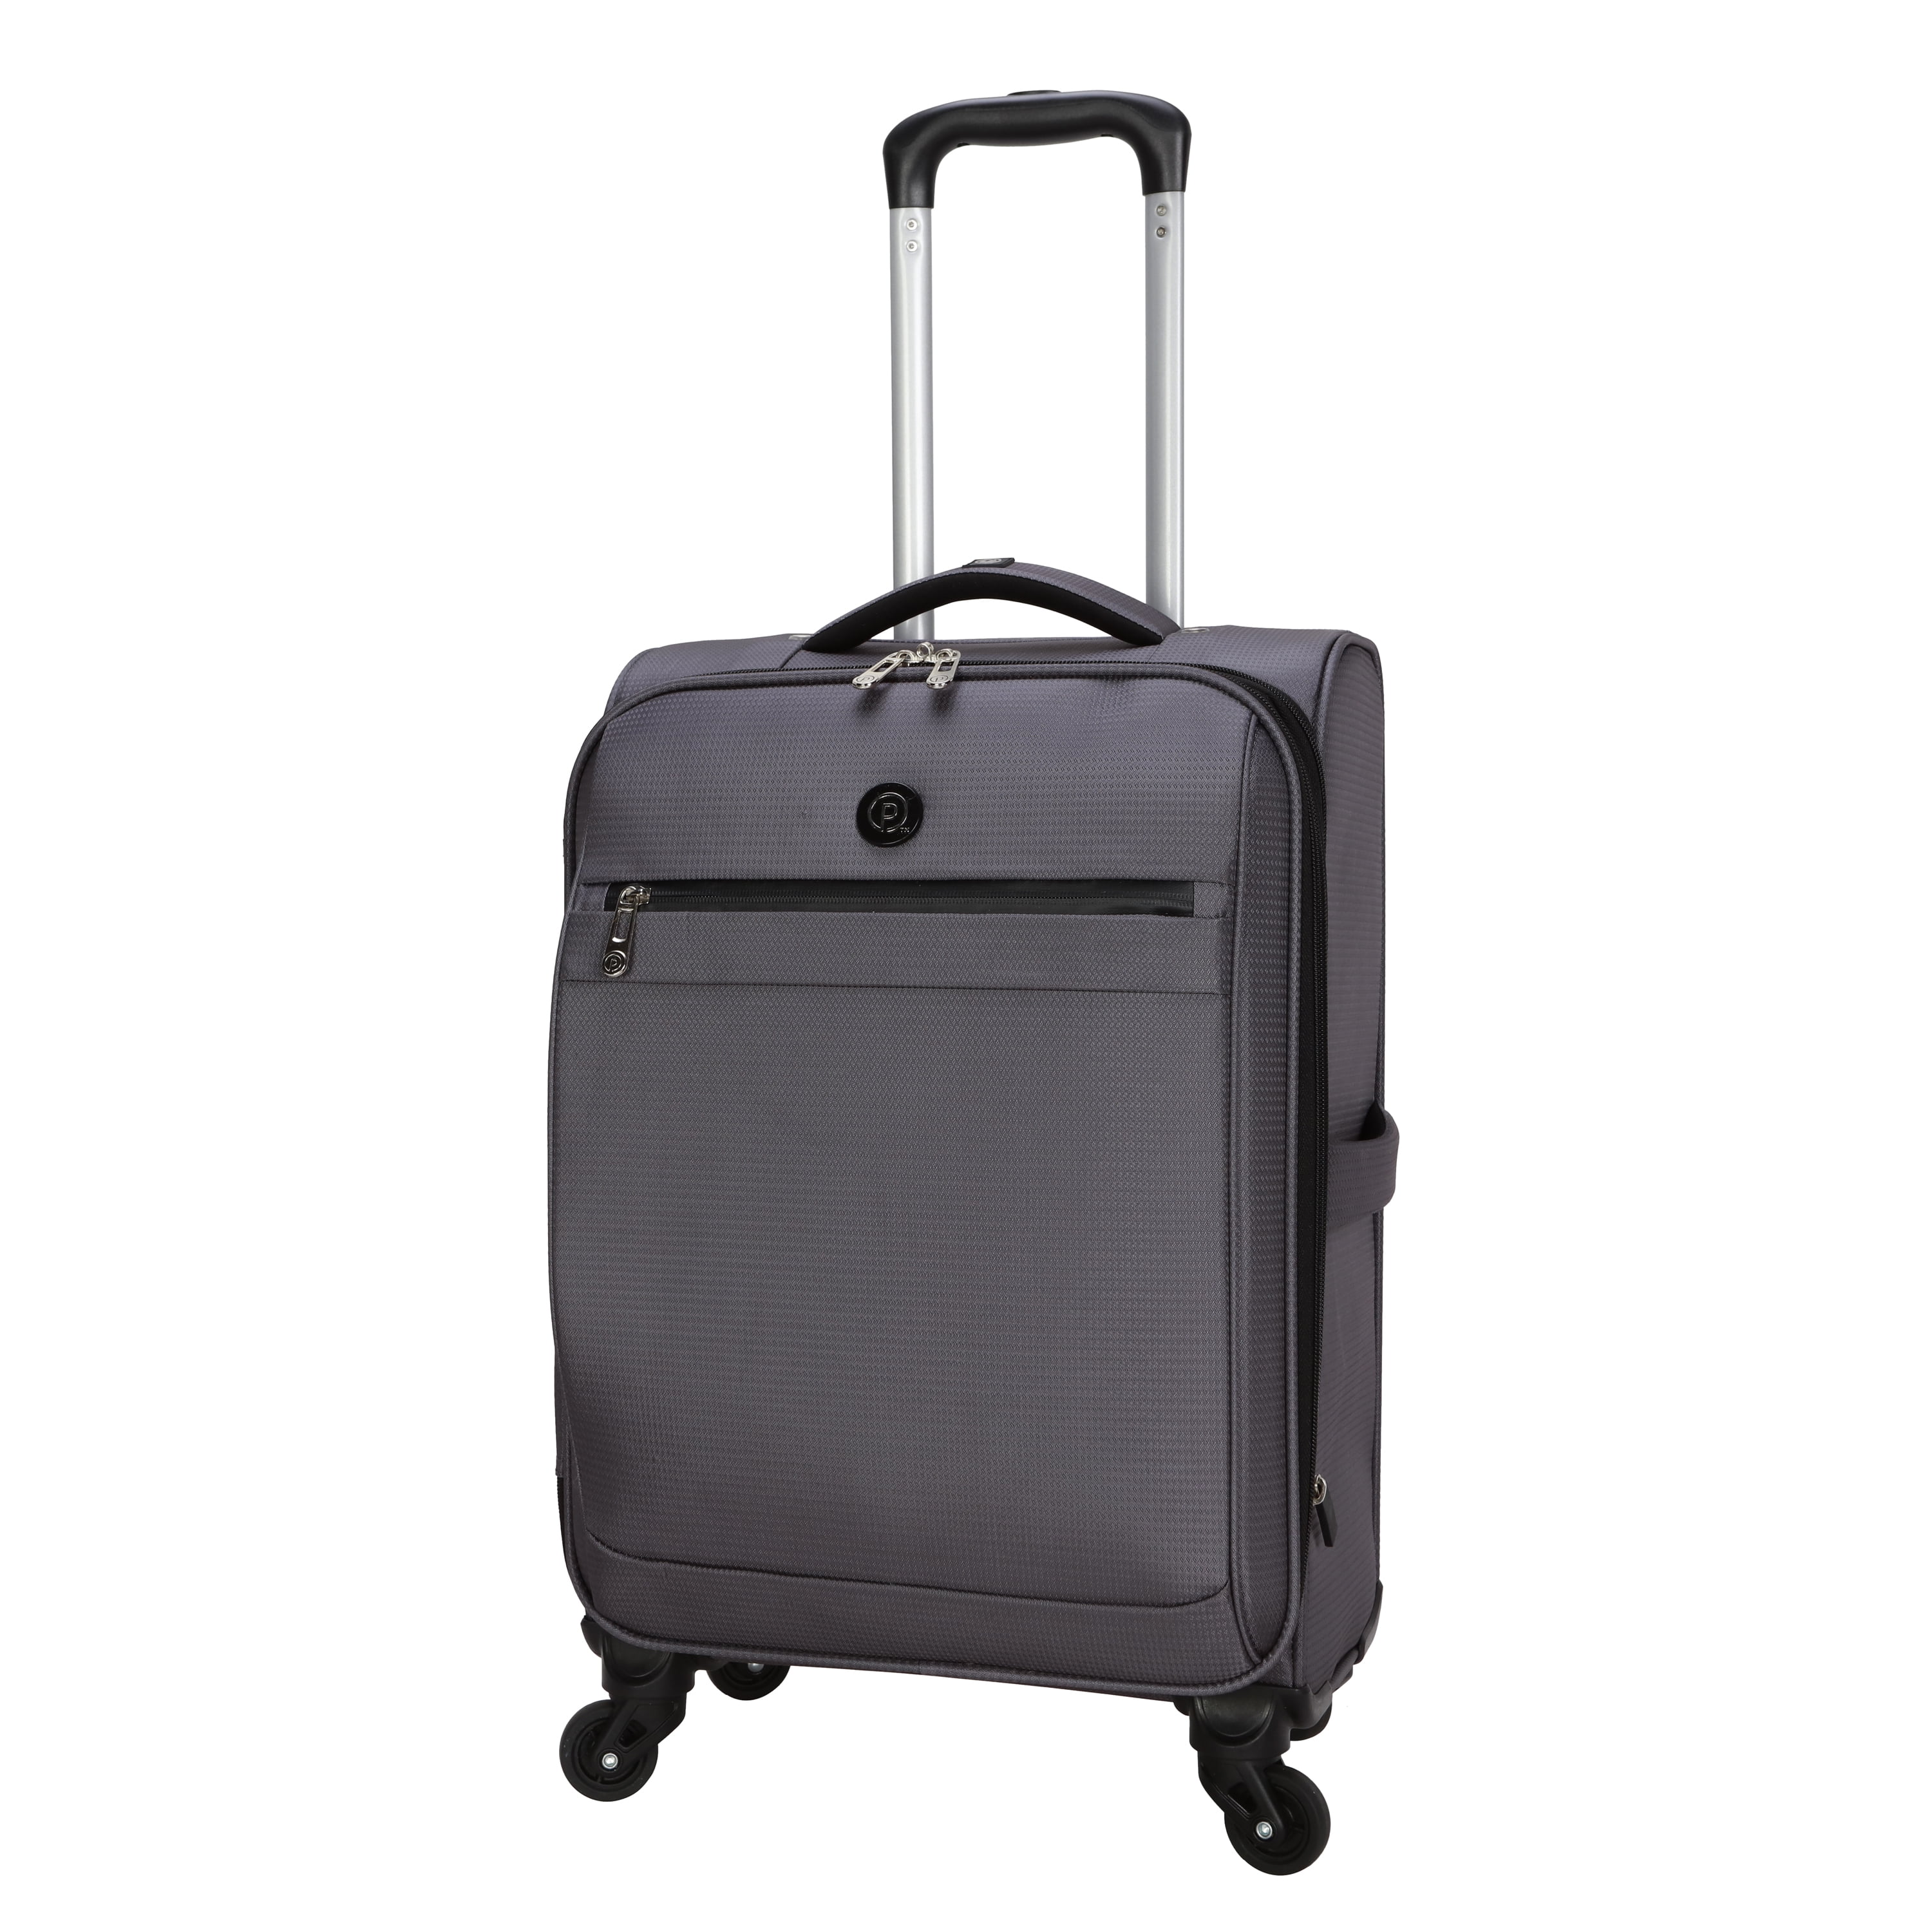 Protege Manual Travel Luggage Scale - 80lb Capacity - (4.5 x 3 x 1.2)